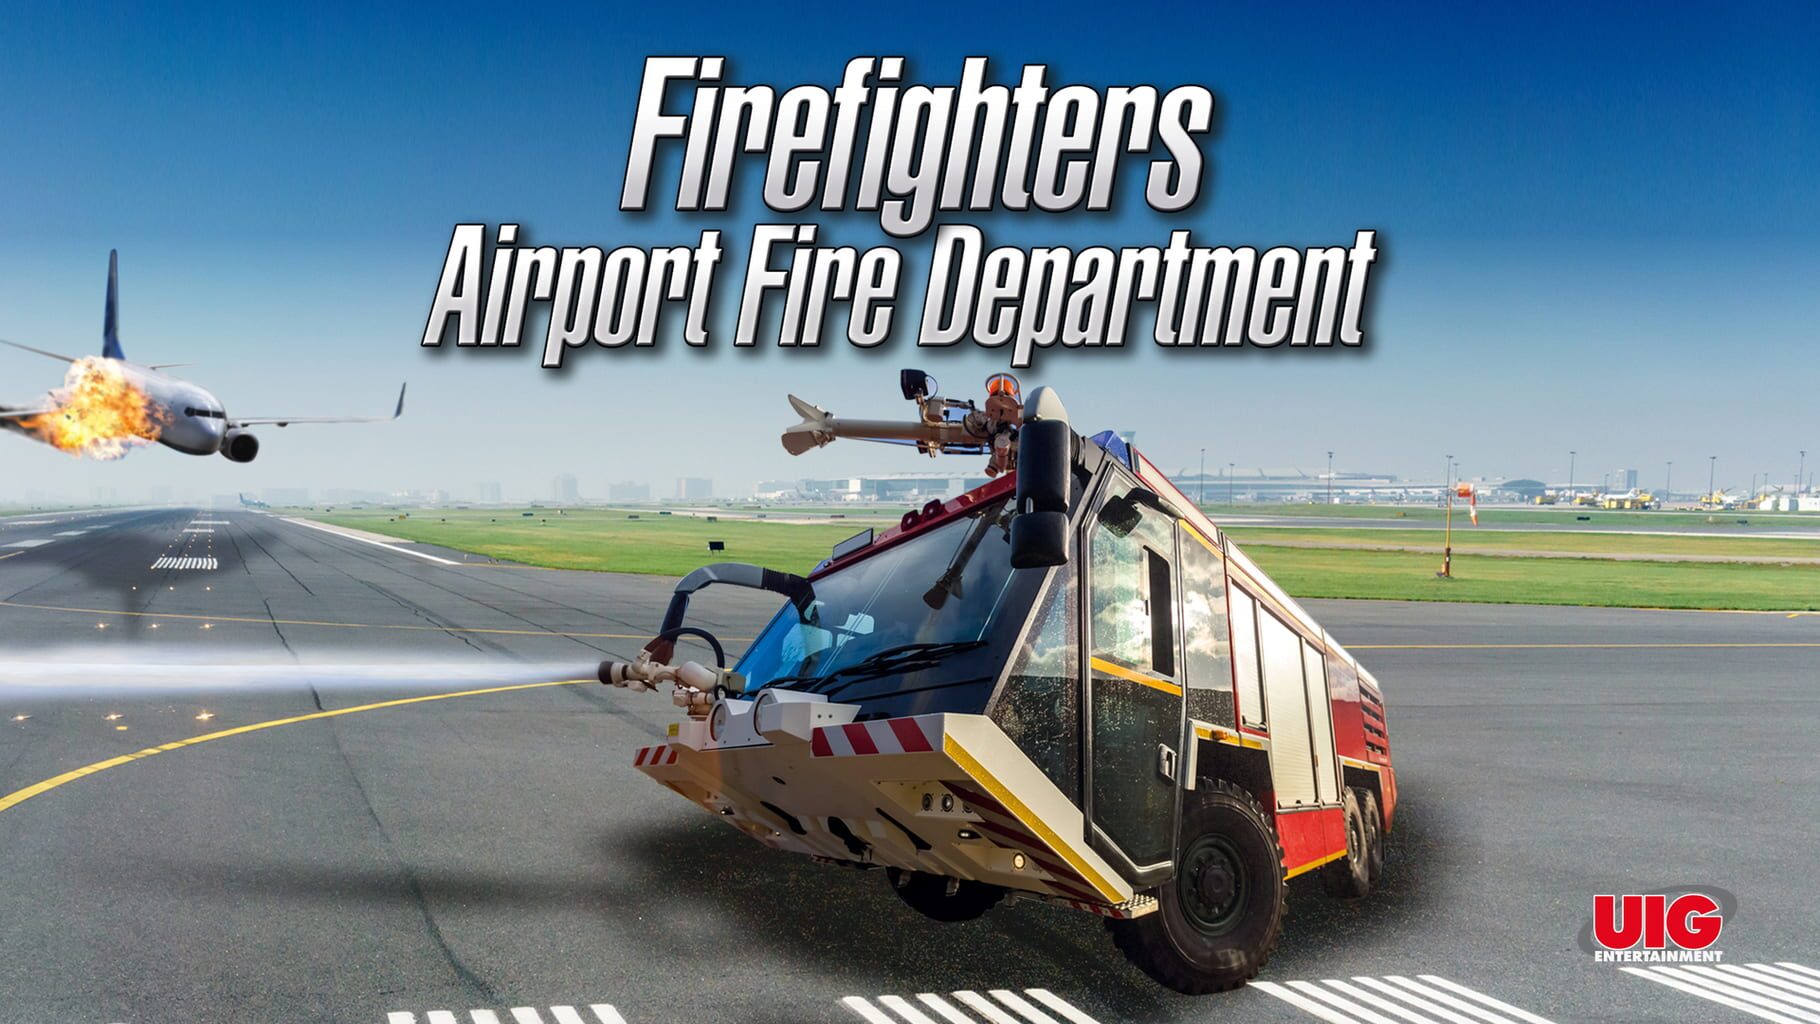 Firefighters: Airport Fire Department artwork